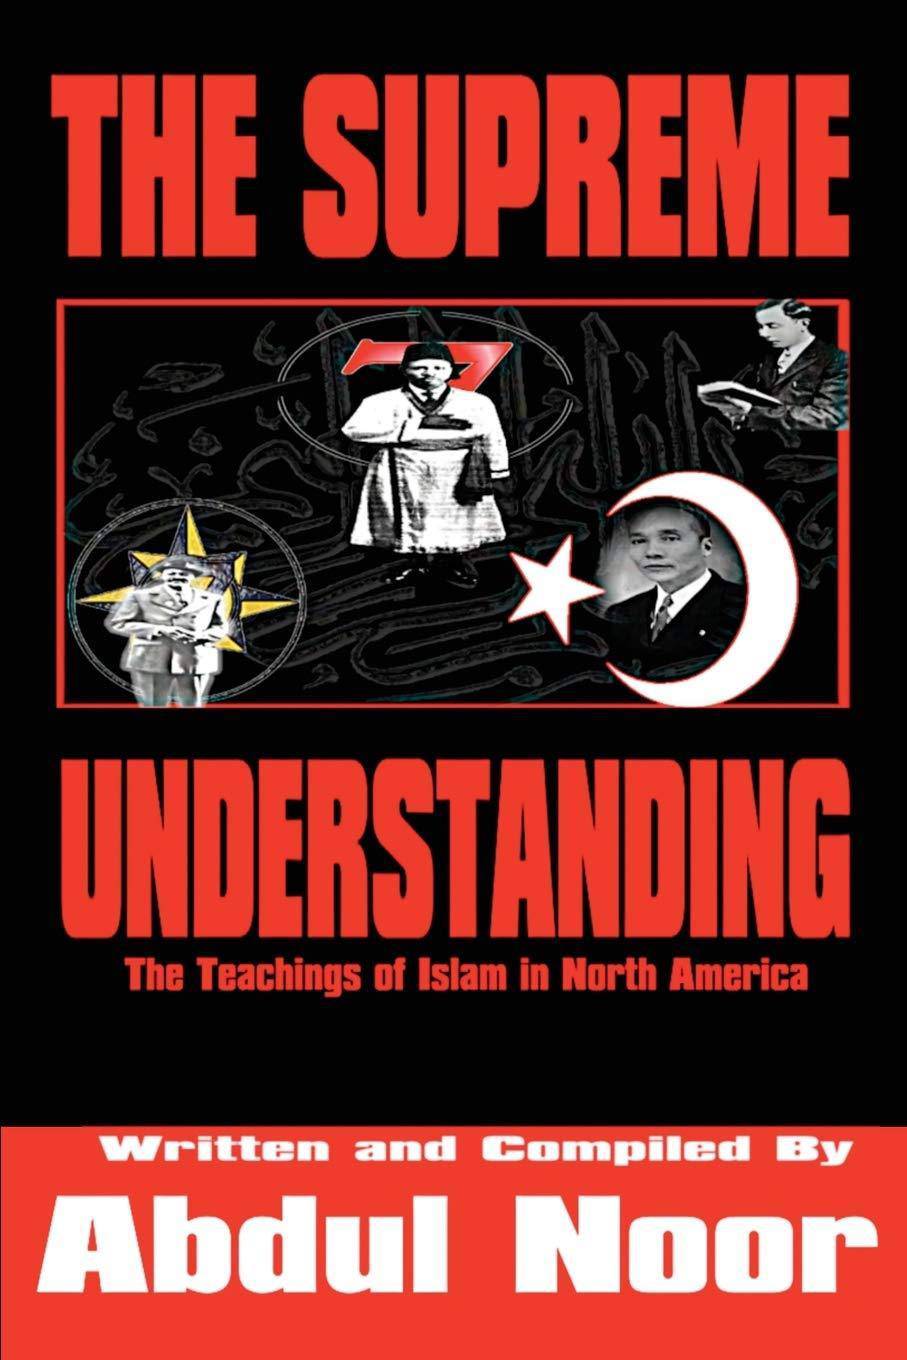 The Supreme Understanding: The Teachings of Islam in North America - SureShot Books Publishing LLC